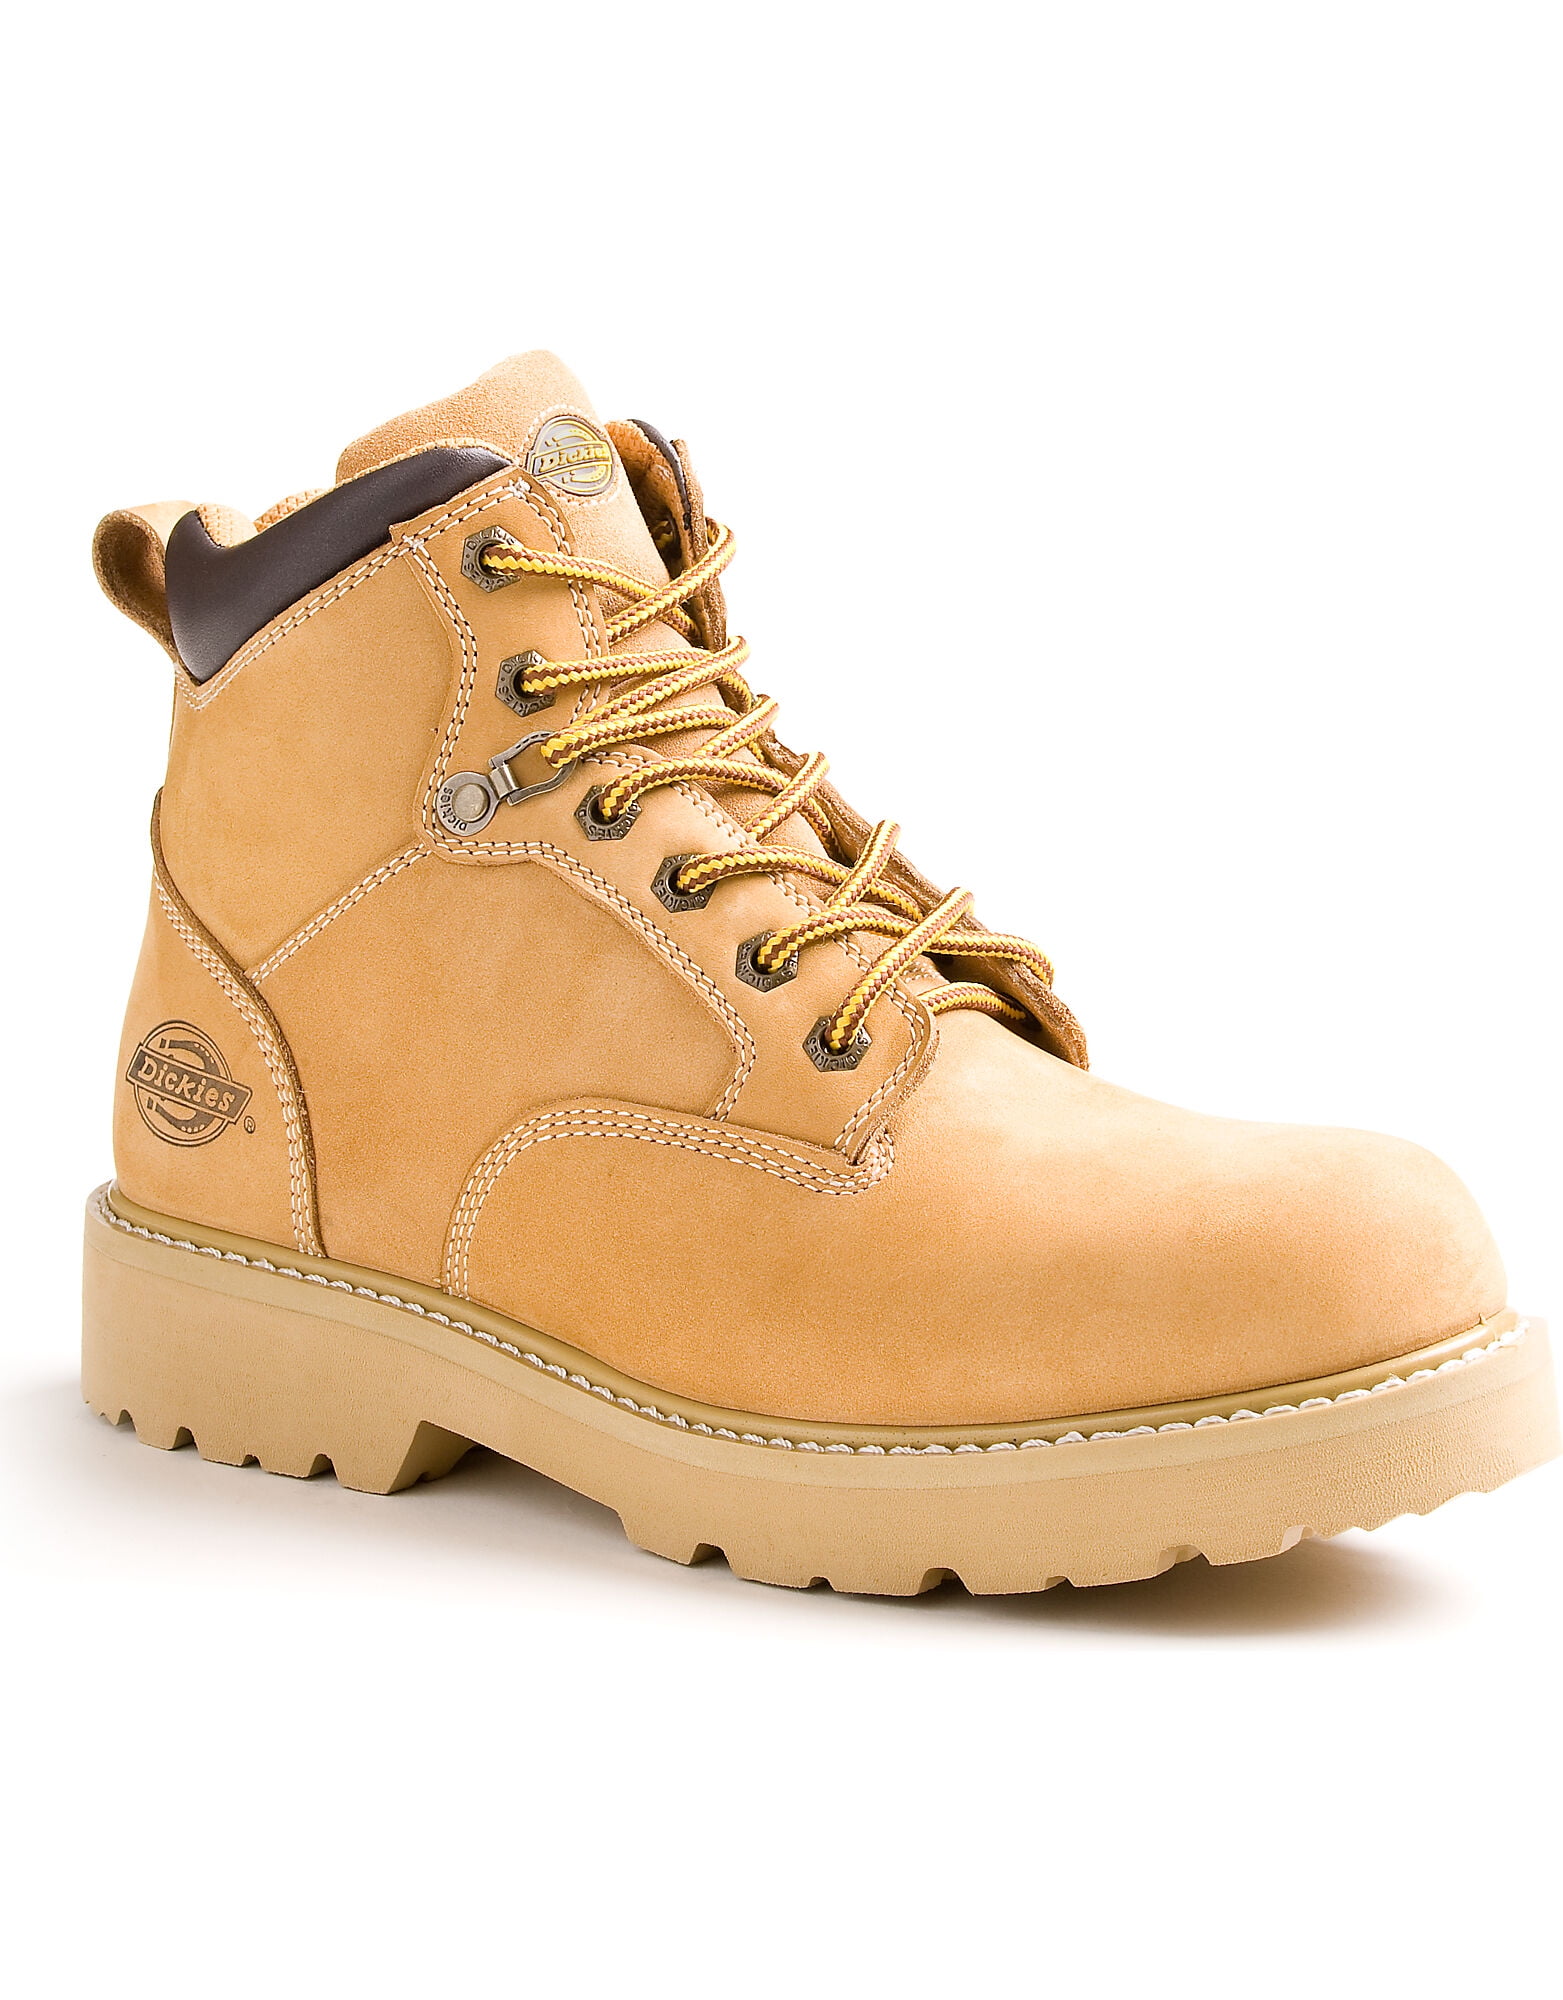 Dickies Ranger Soft Toe Boot (Men's) - Walmart.com